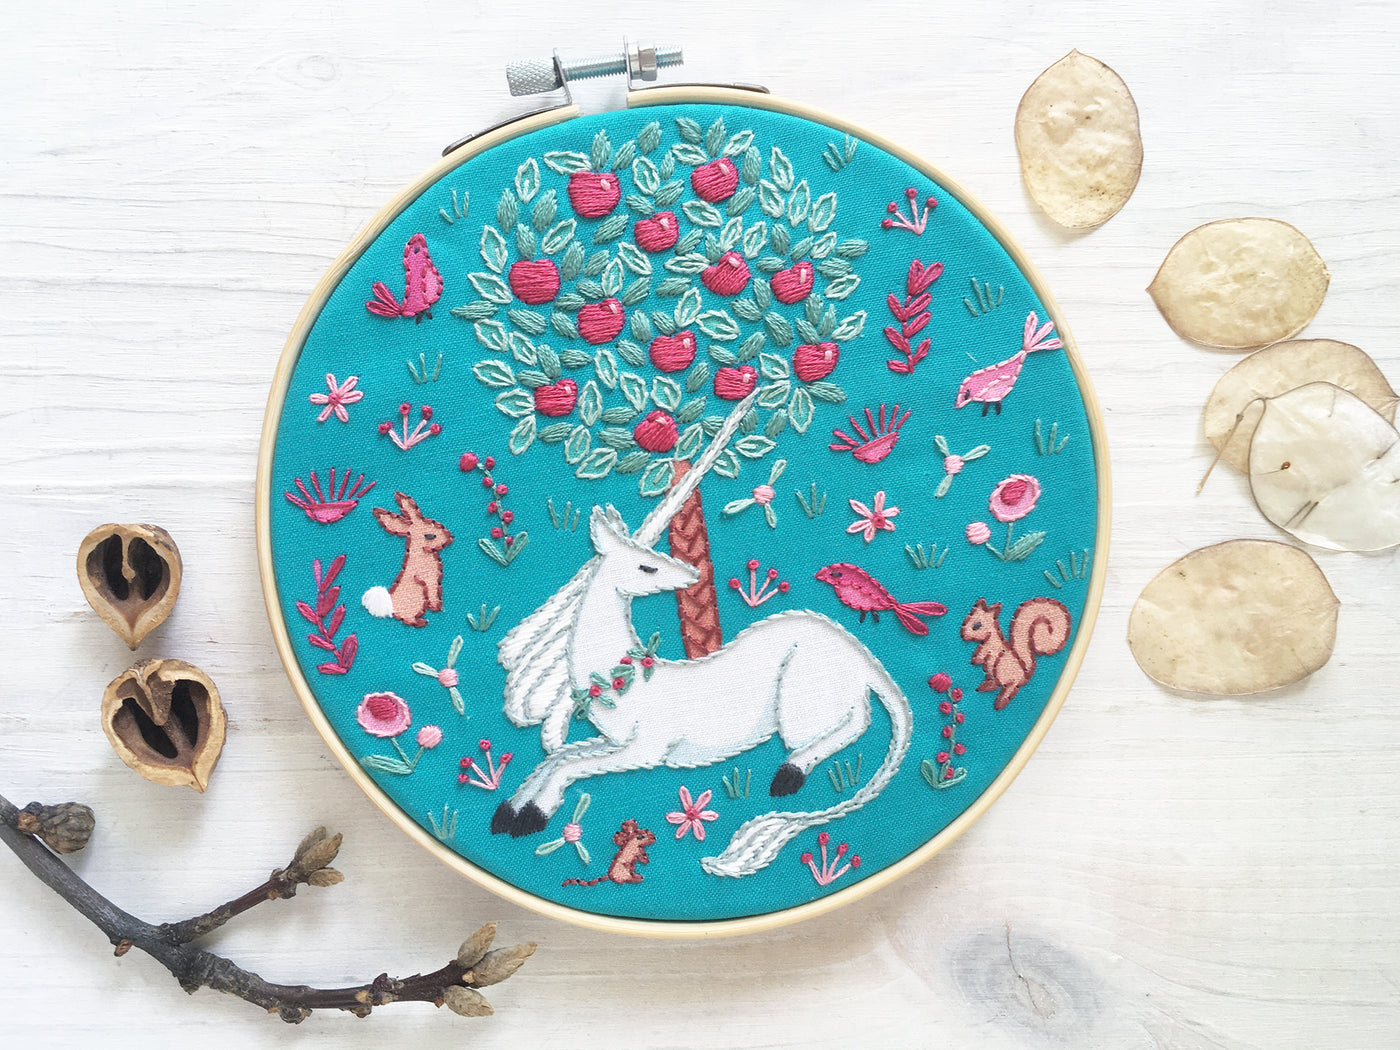 Unicorn Garden Hand Embroidery Sampler